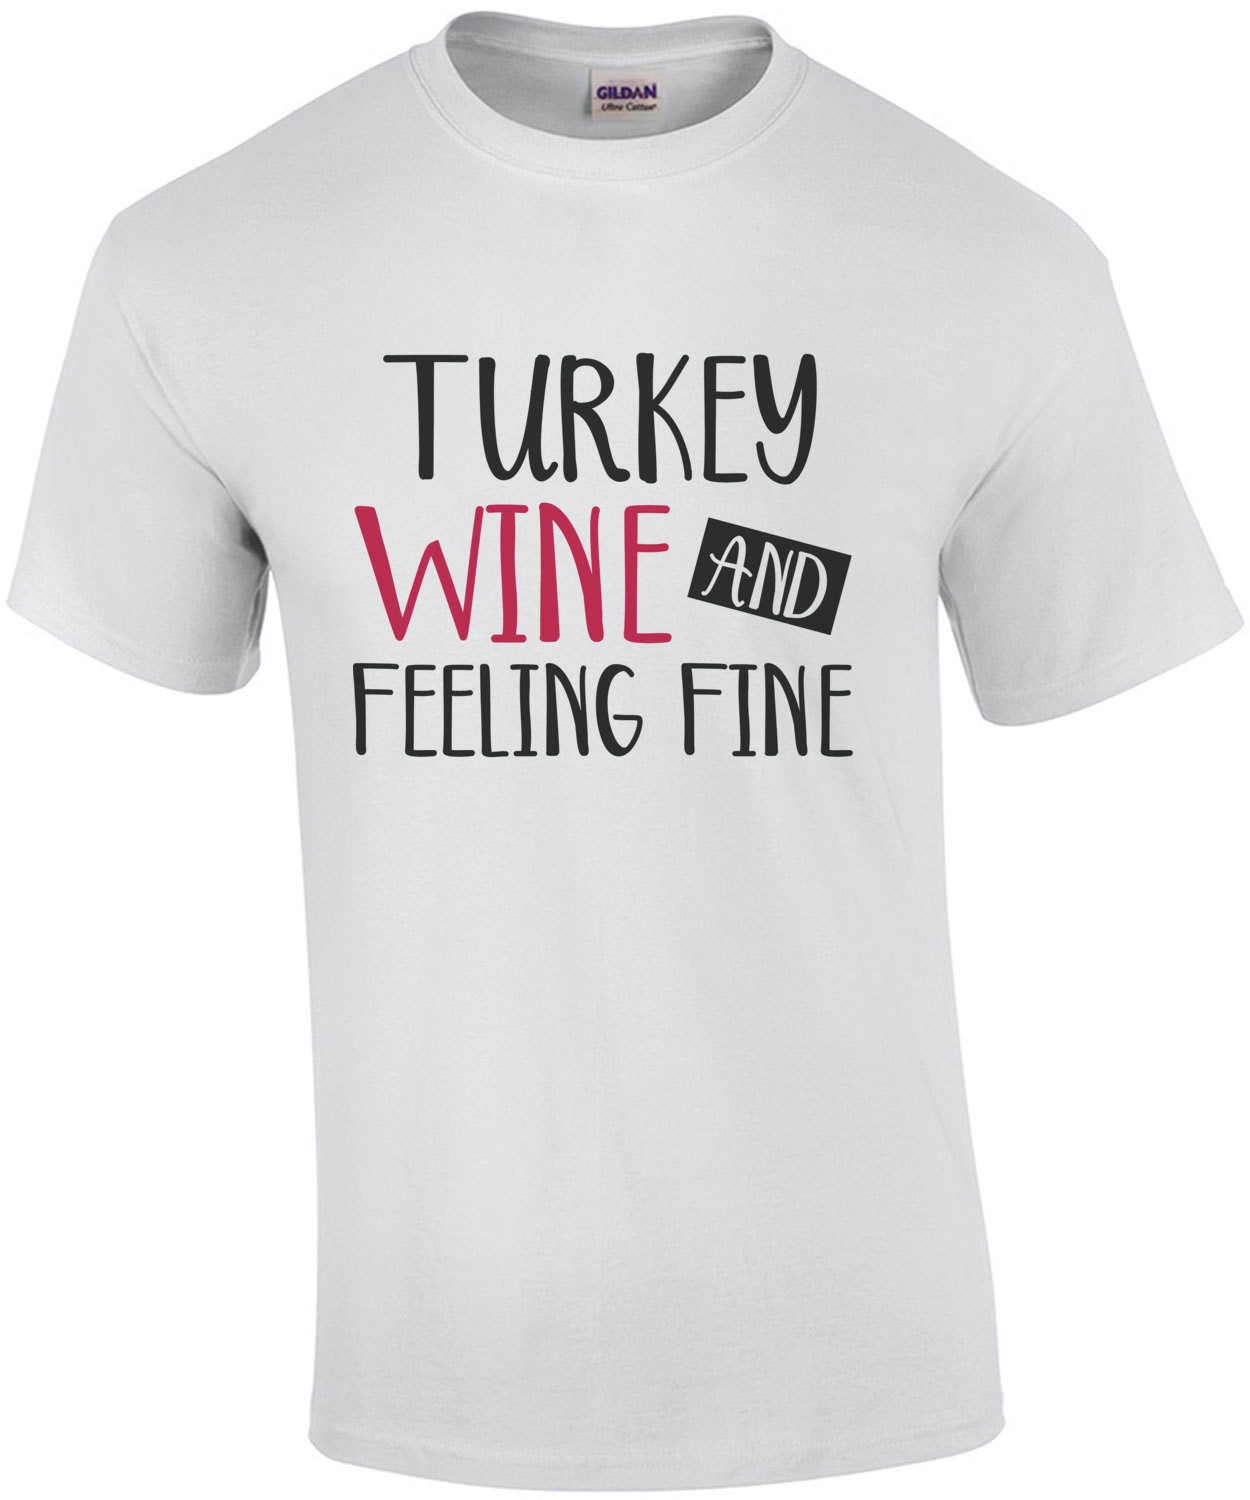 Turkey wine and feeling fine - thanksgiving t-shirt